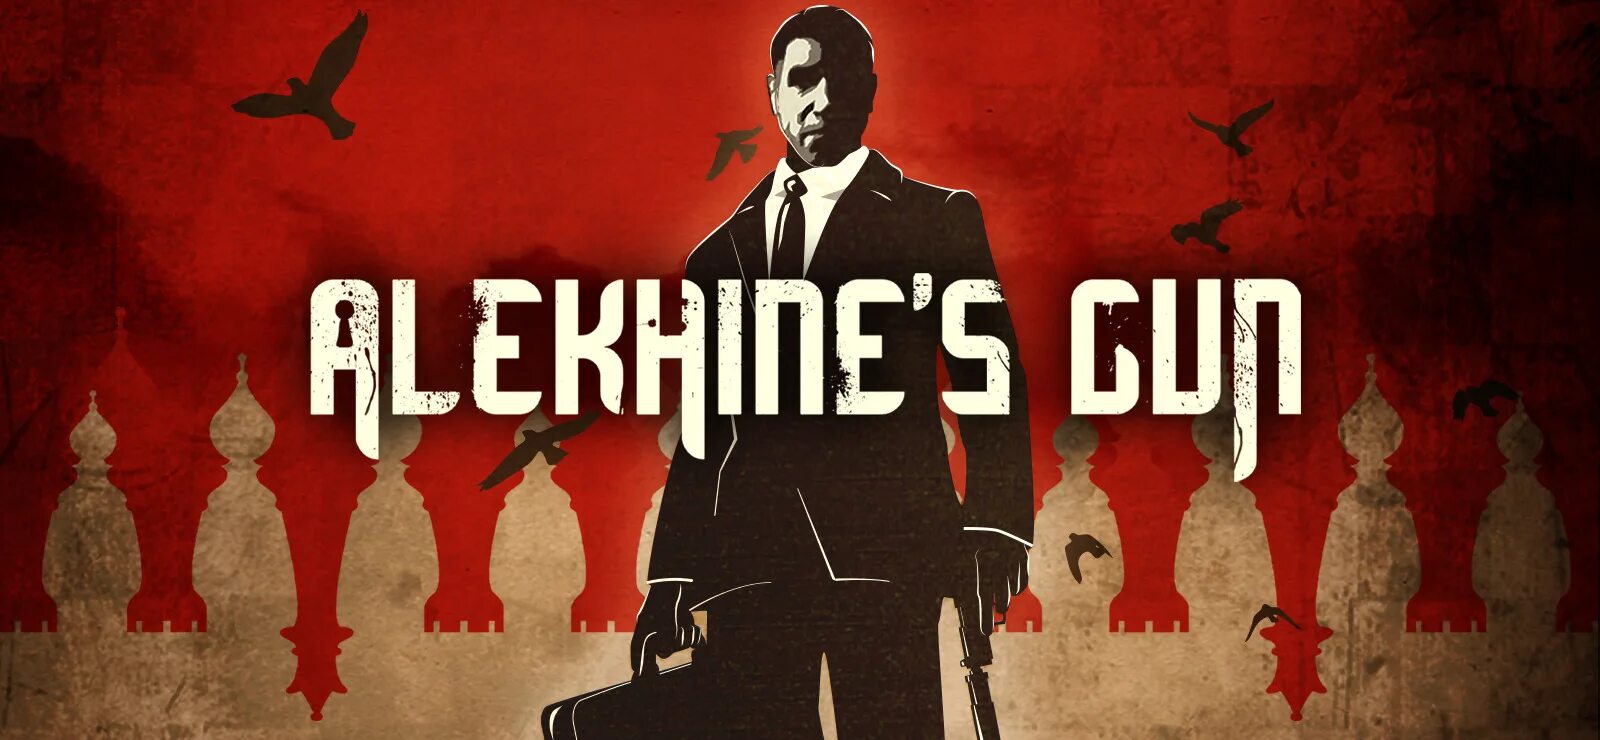 Alekhine s gun. Alekhine's Gun игра. Alekhine's Gun [ps4]. Alekhine’s Gun Xbox. Семён Строгов смерть шпионам.